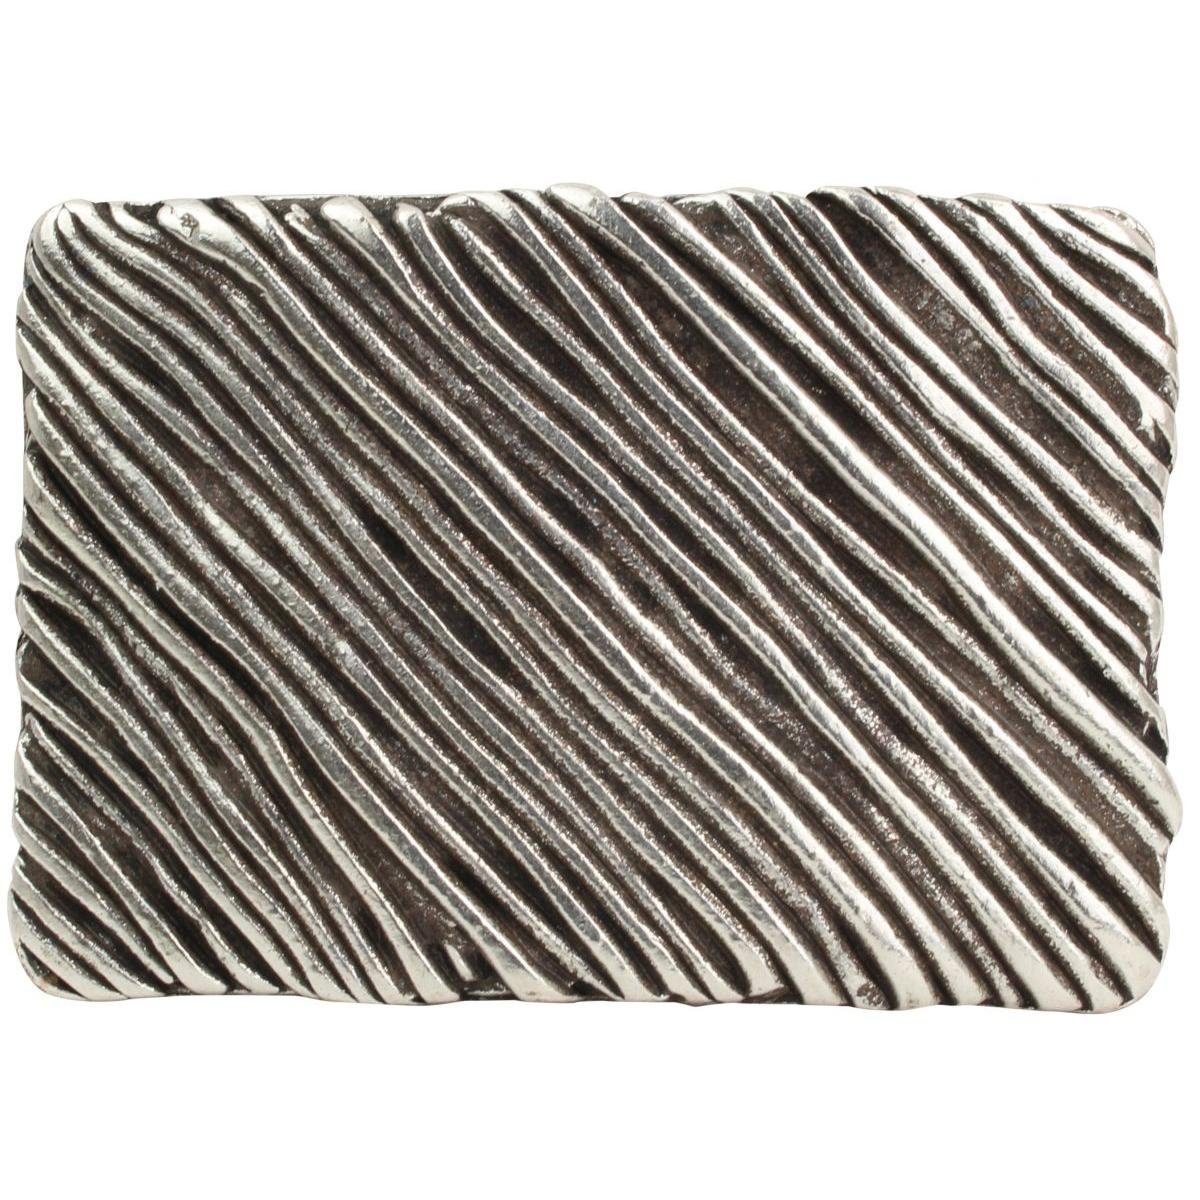 BELTINGER Gürtelschnalle Superficial Stripes Wechselschließe Gürtelschließe - cm 40m Silber Buckle 4,0